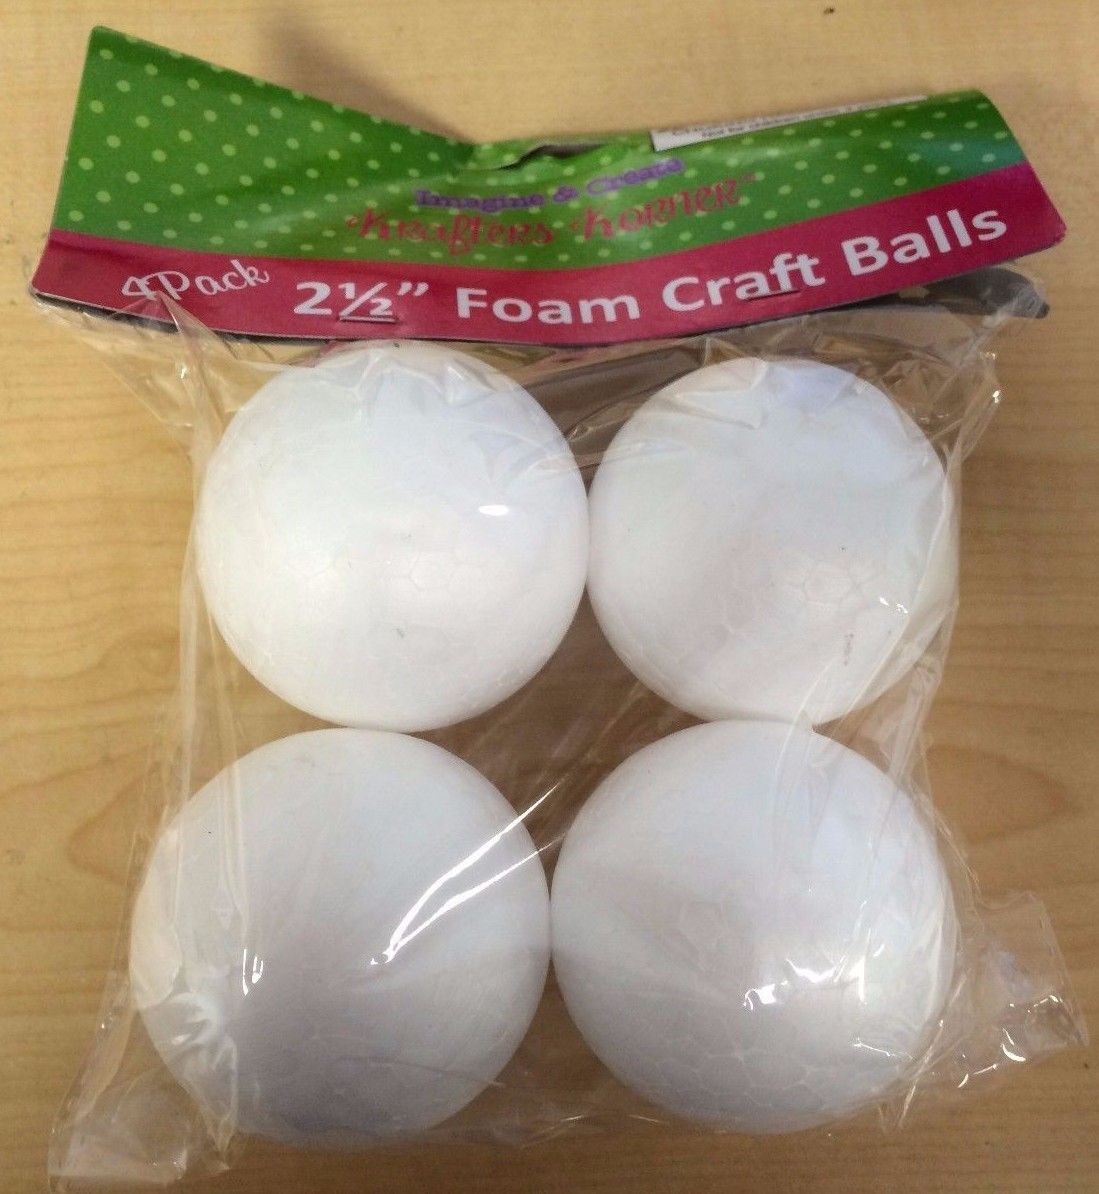 4 Pack 2.5'' Foam Craft Balls